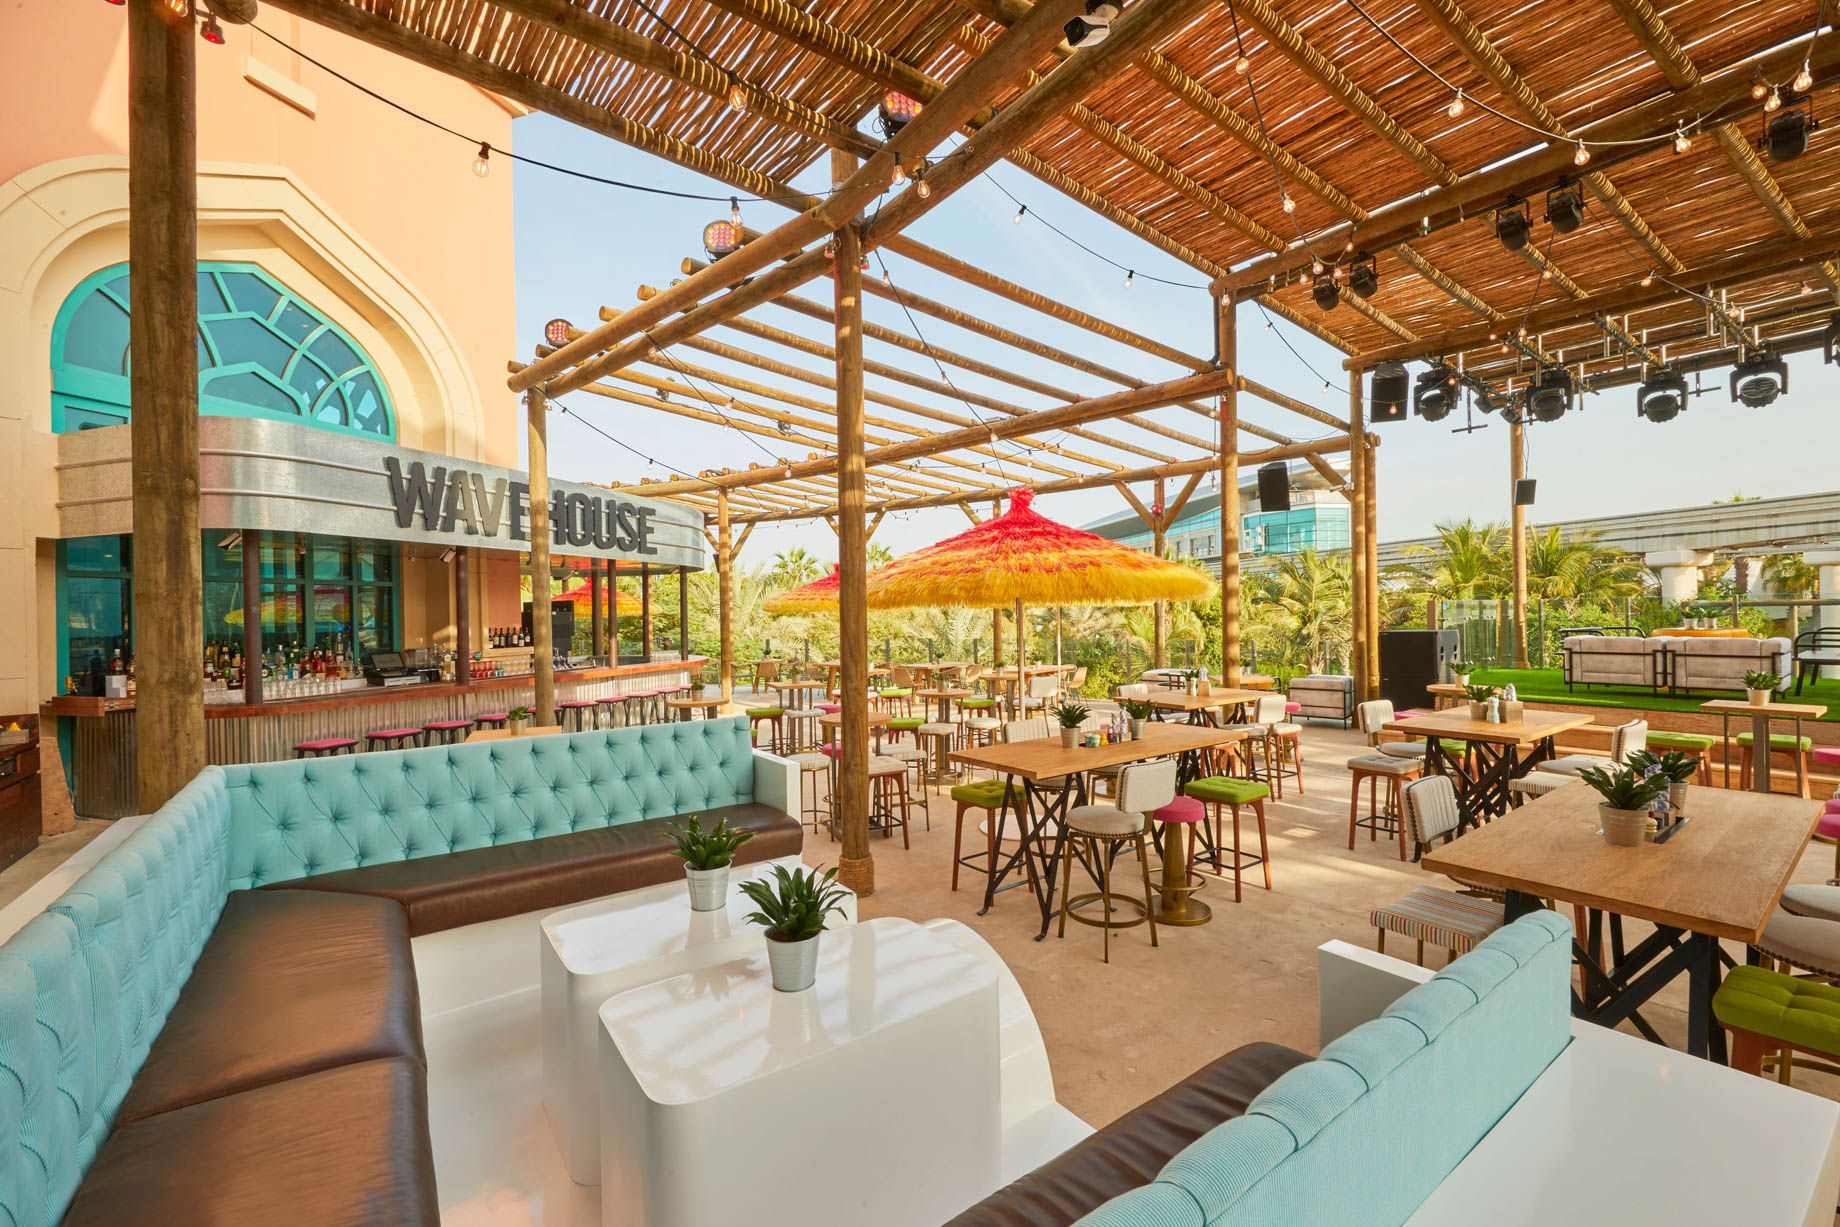 Atlantis The Palm Resort – Crescent Rd, Dubai, UAE – Wavehouse Restaurant Terrace